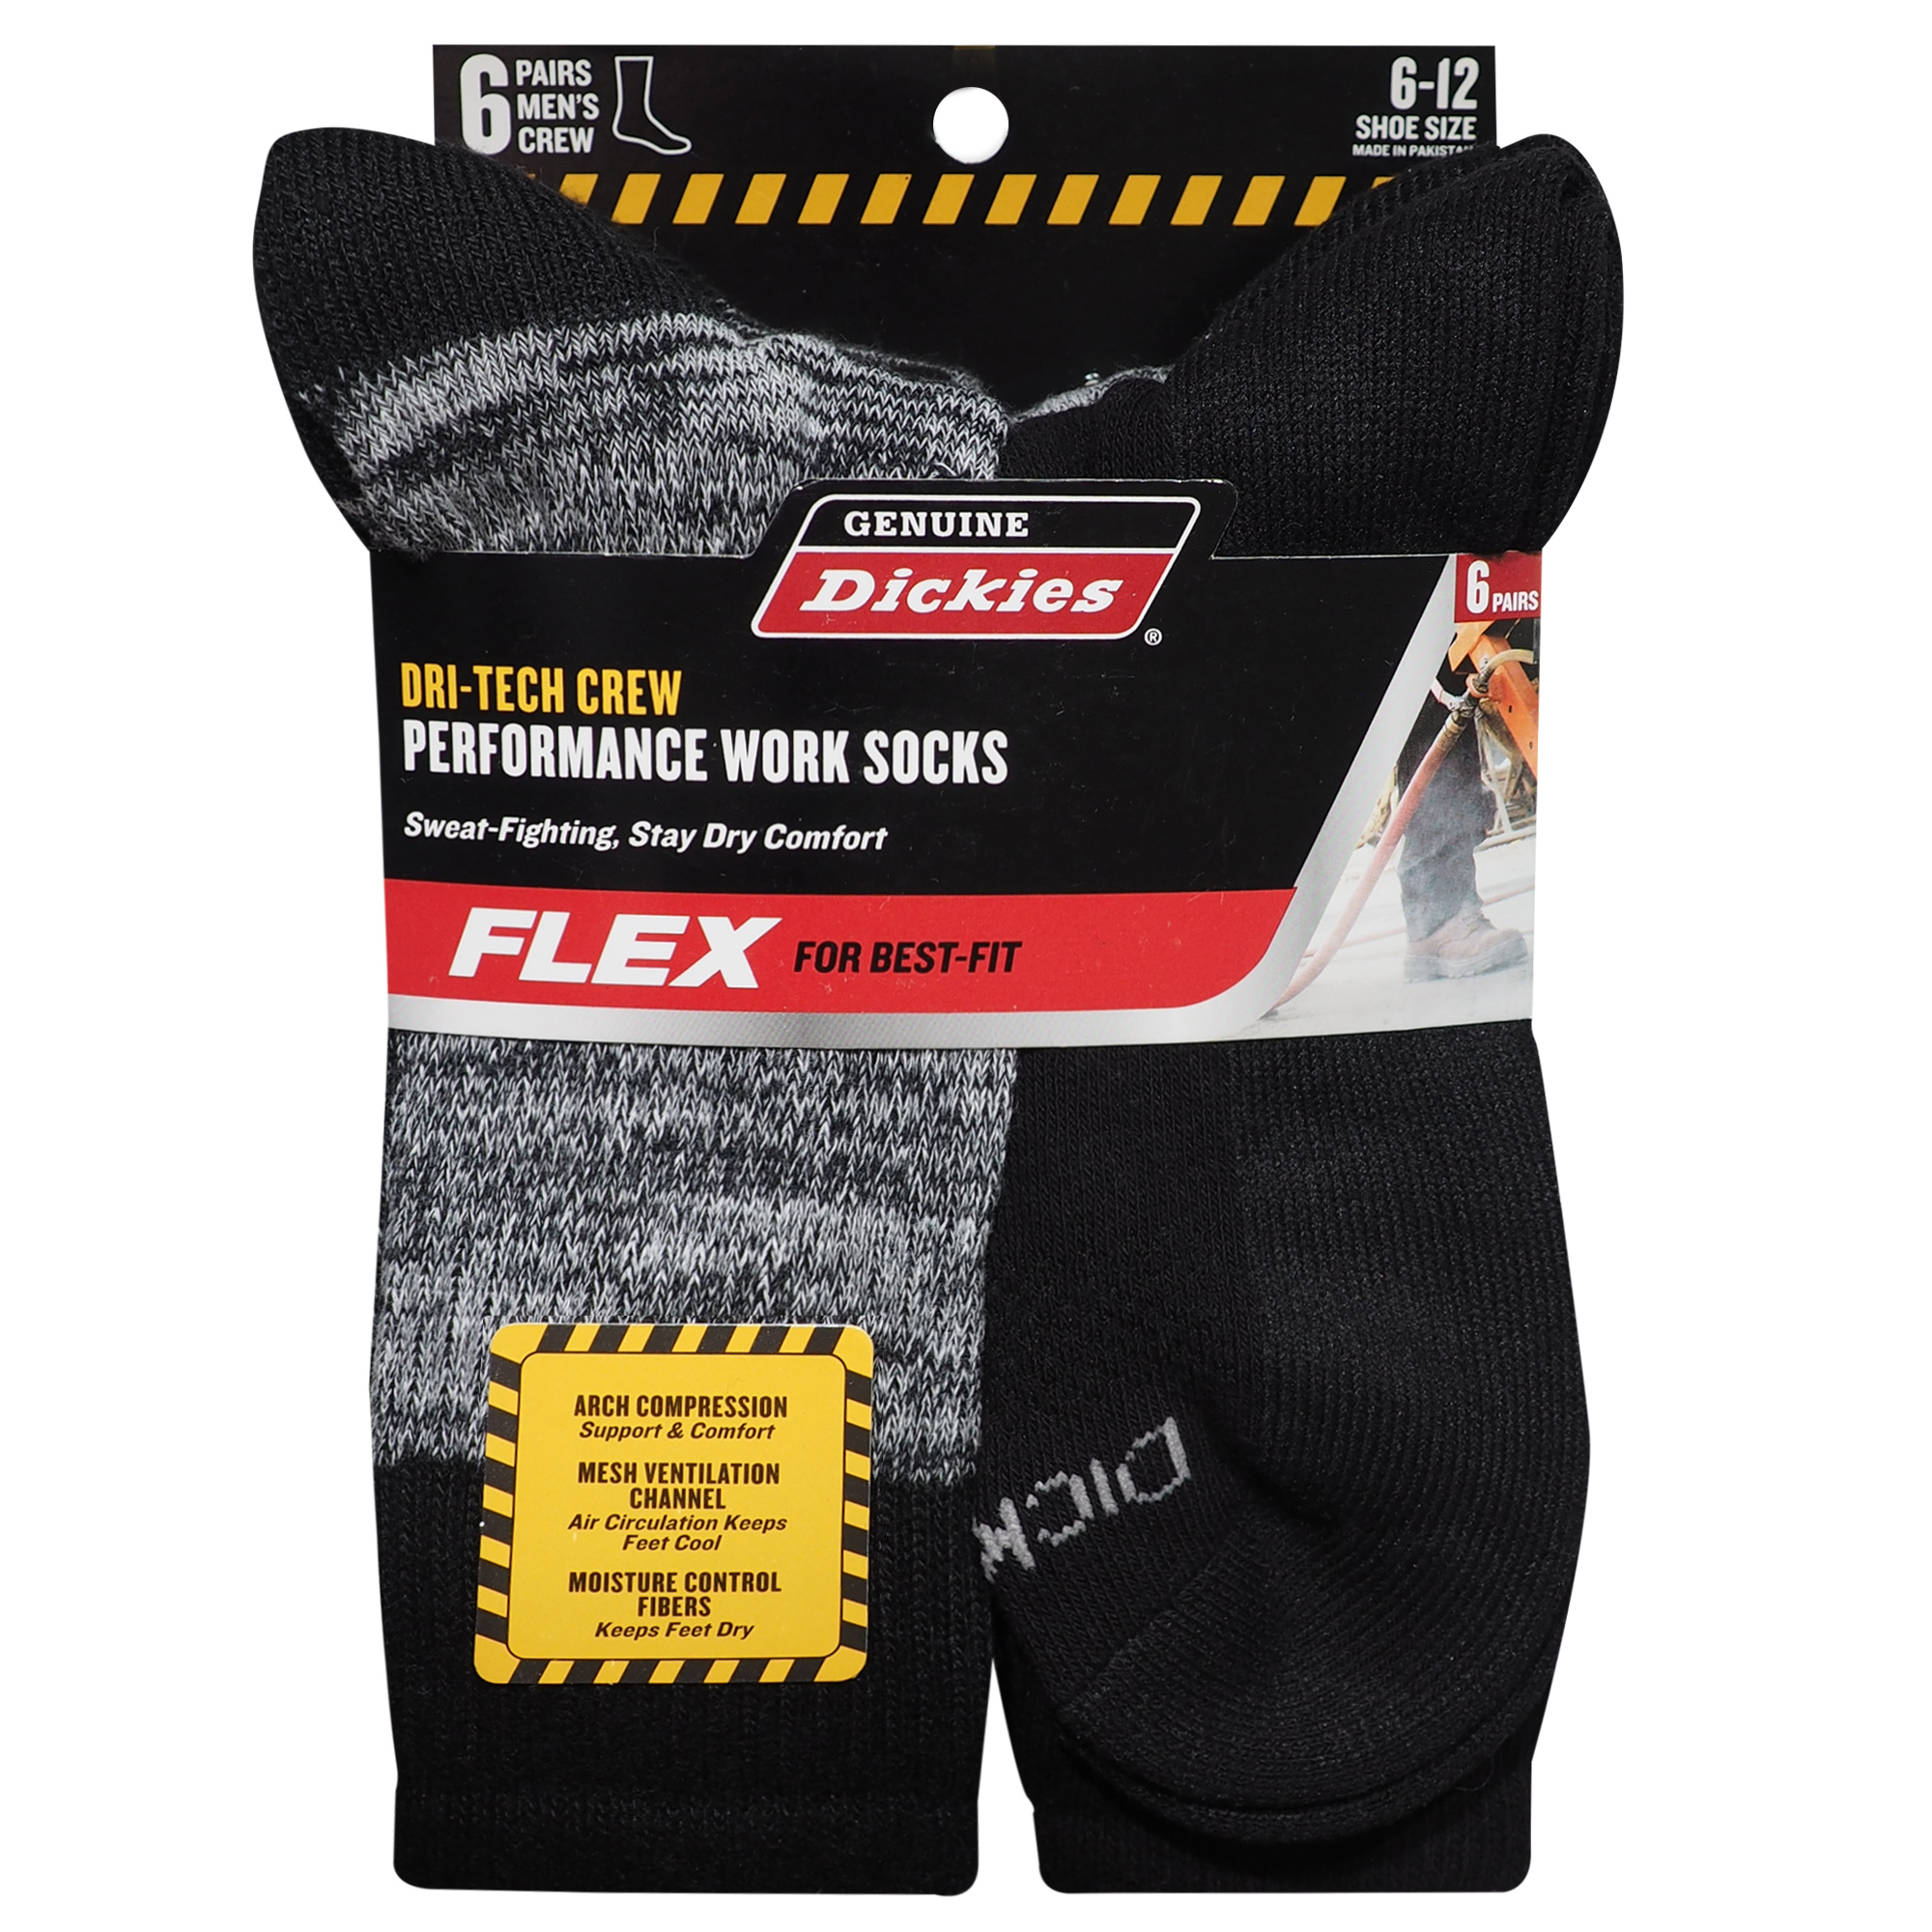 Genuine Dickies Men's Dri-Tech Crew Socks, 6-Pack, Sizes 6-15 - image 1 of 3